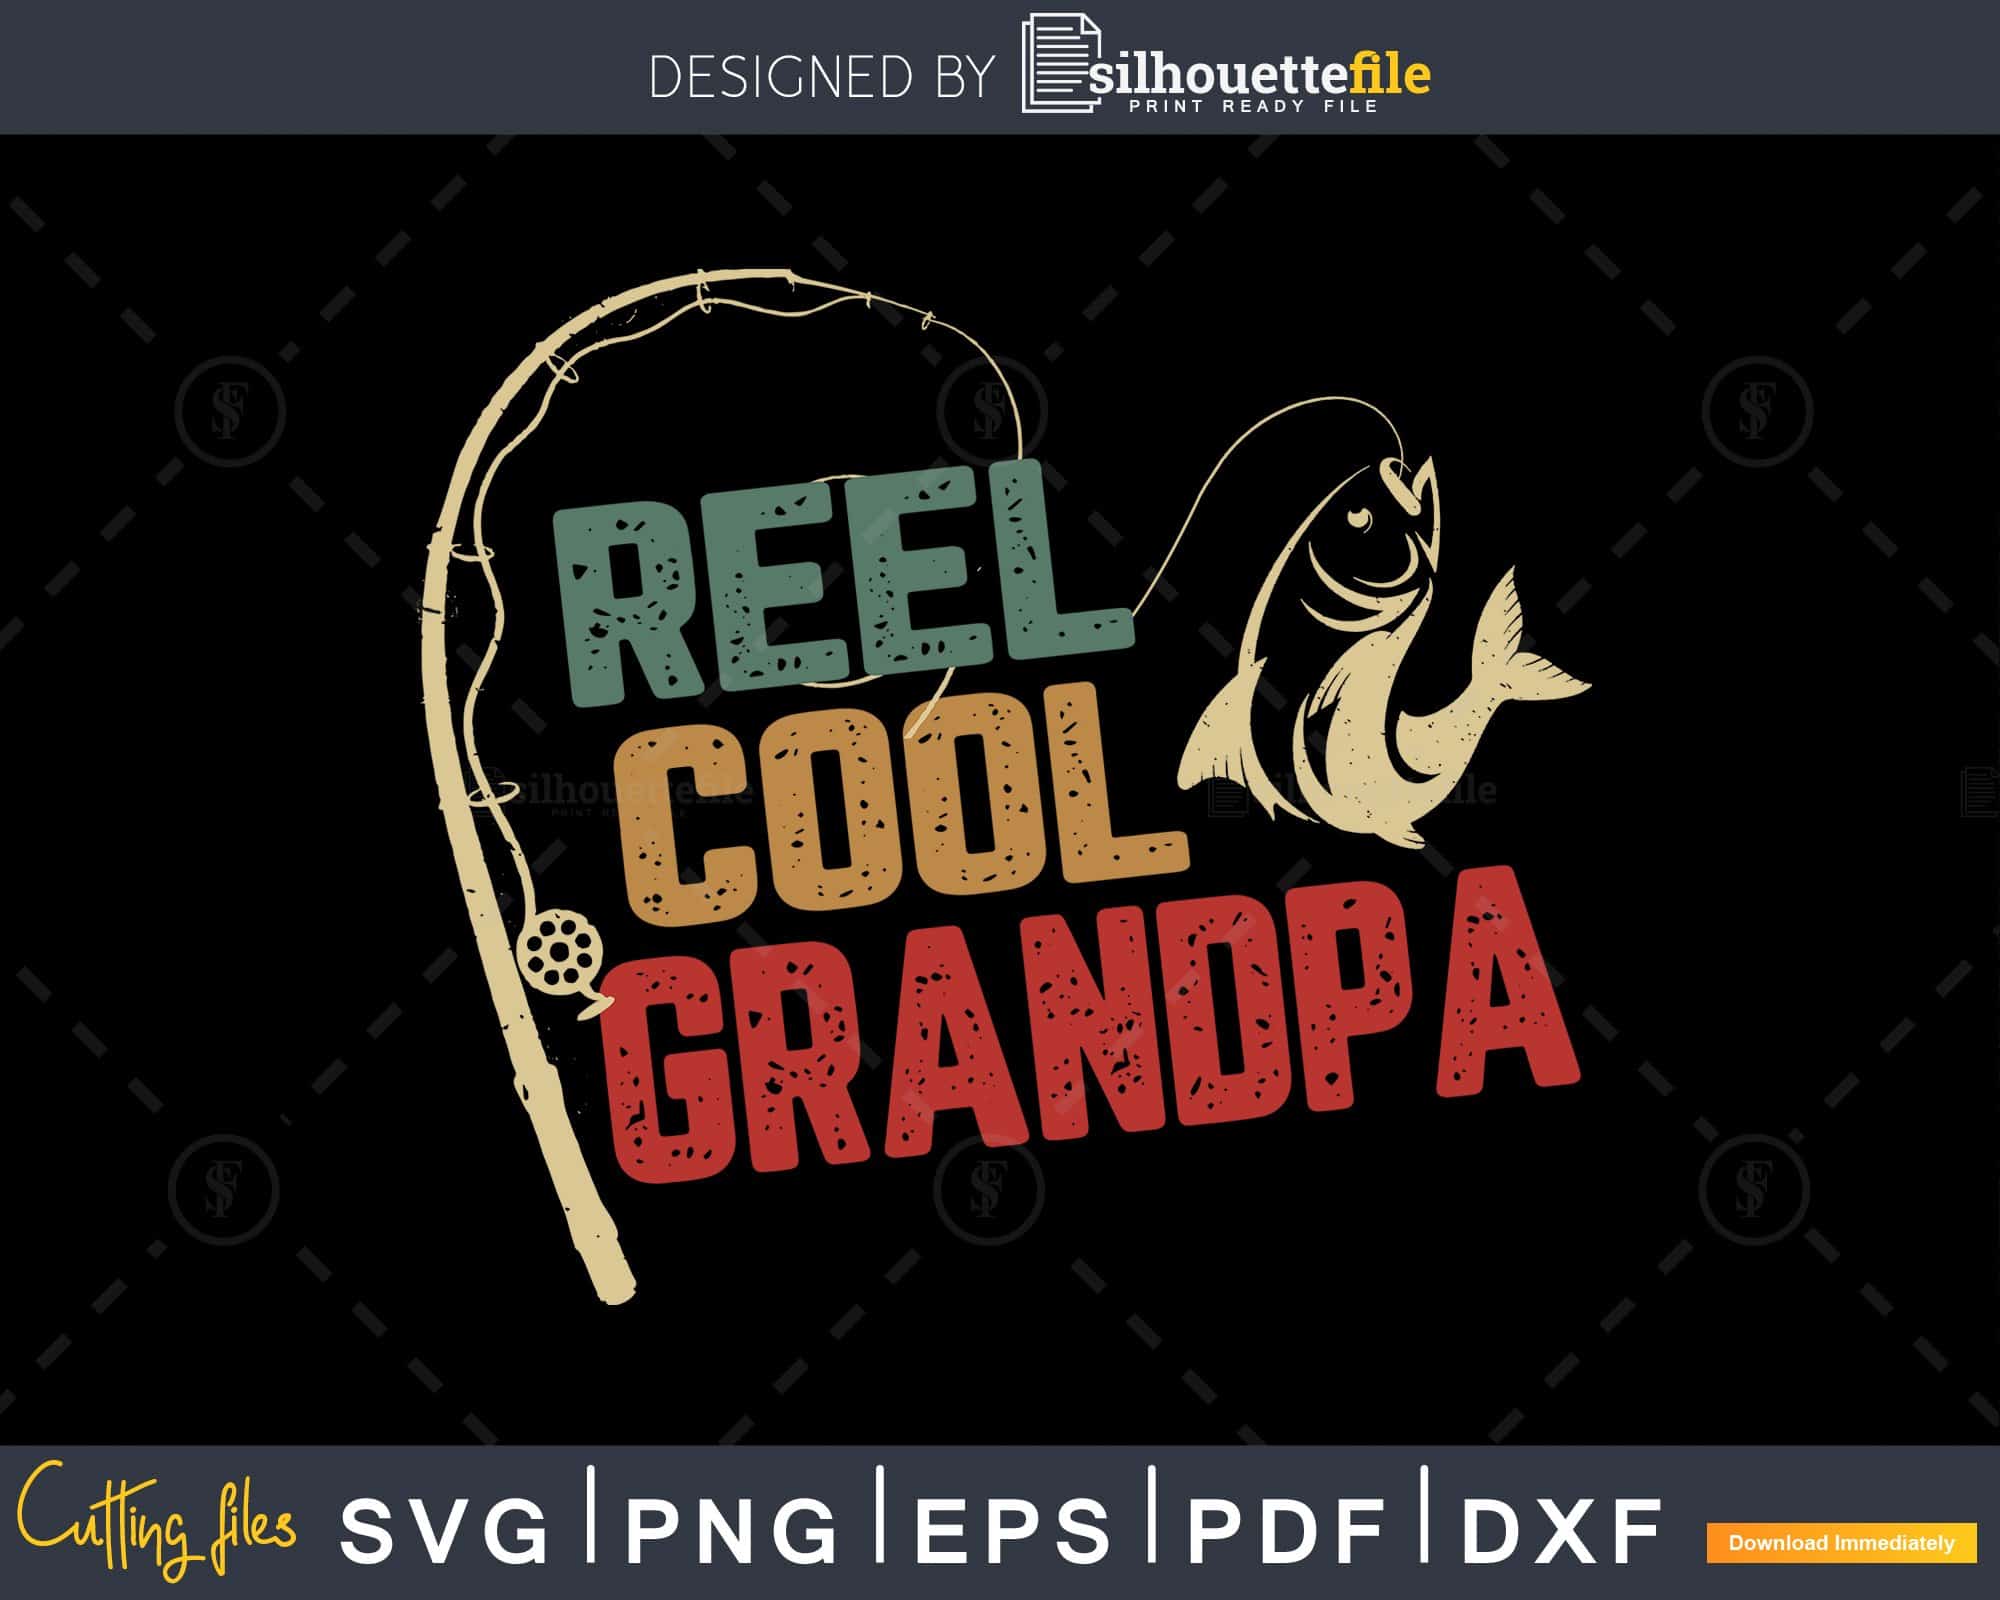 Reel cool grandpa svg dxf eps design printable craft cut cutting files